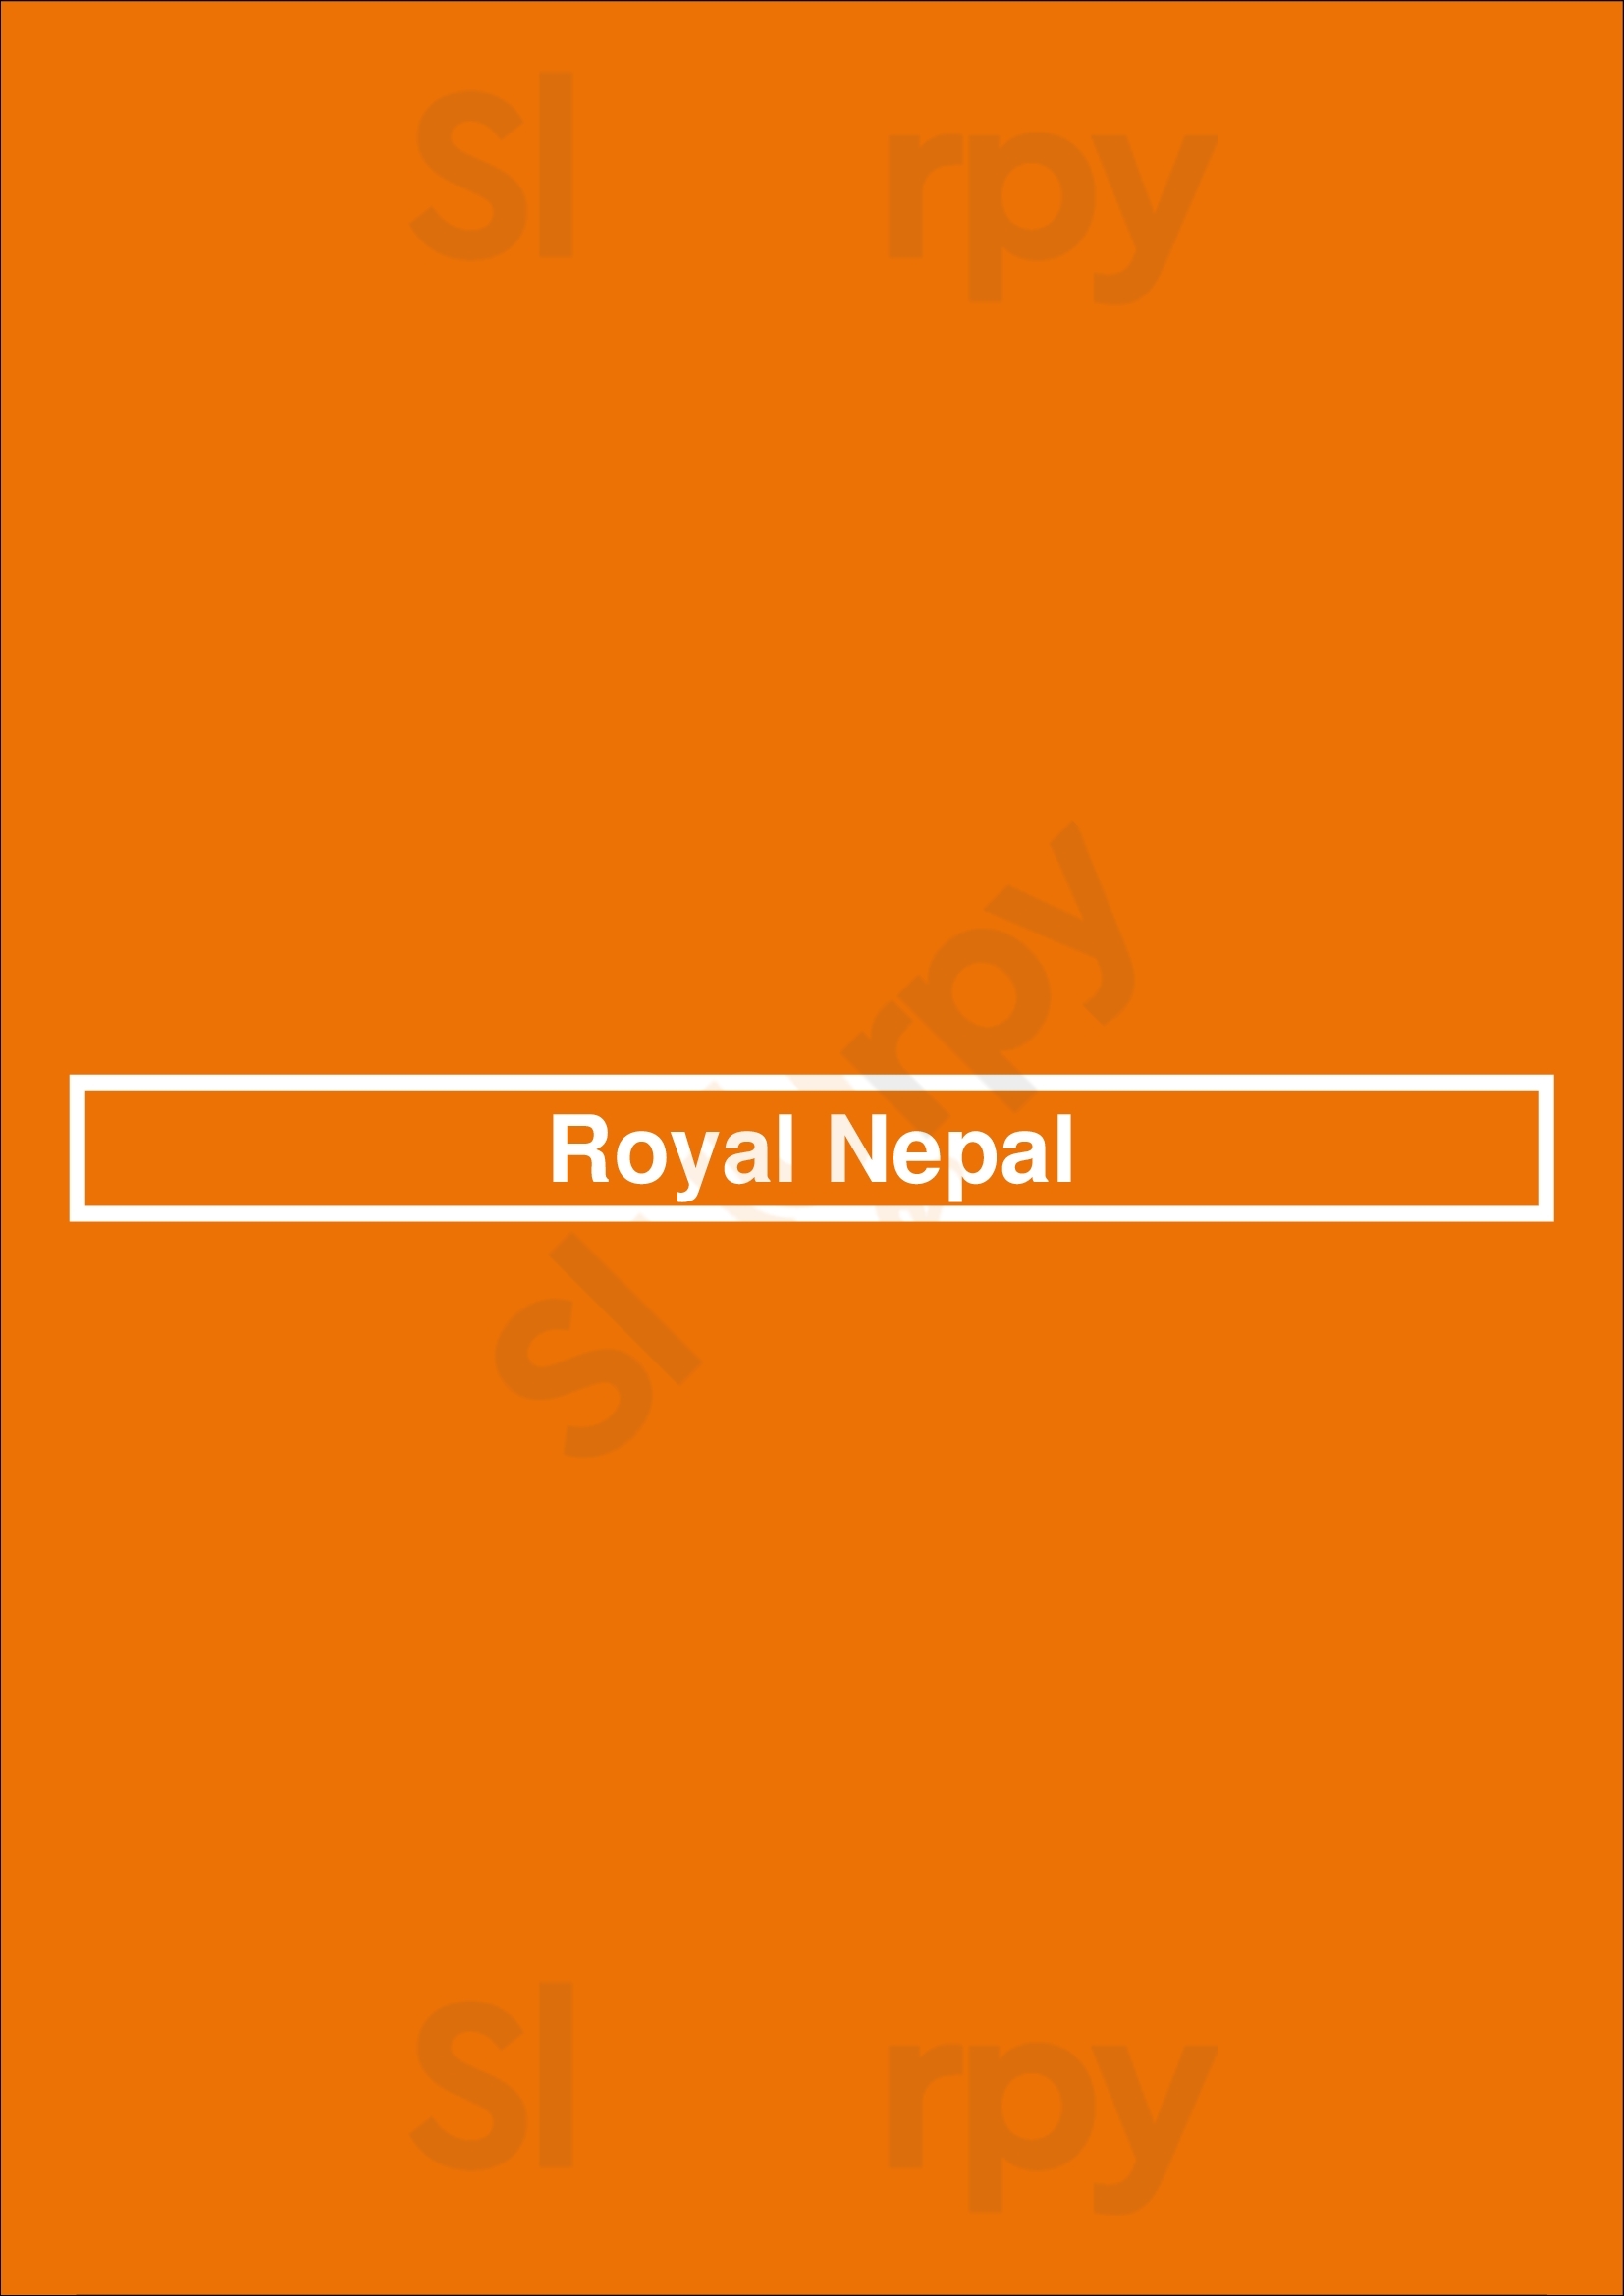 Royal Nepal Restaurante Barcelona Menu - 1